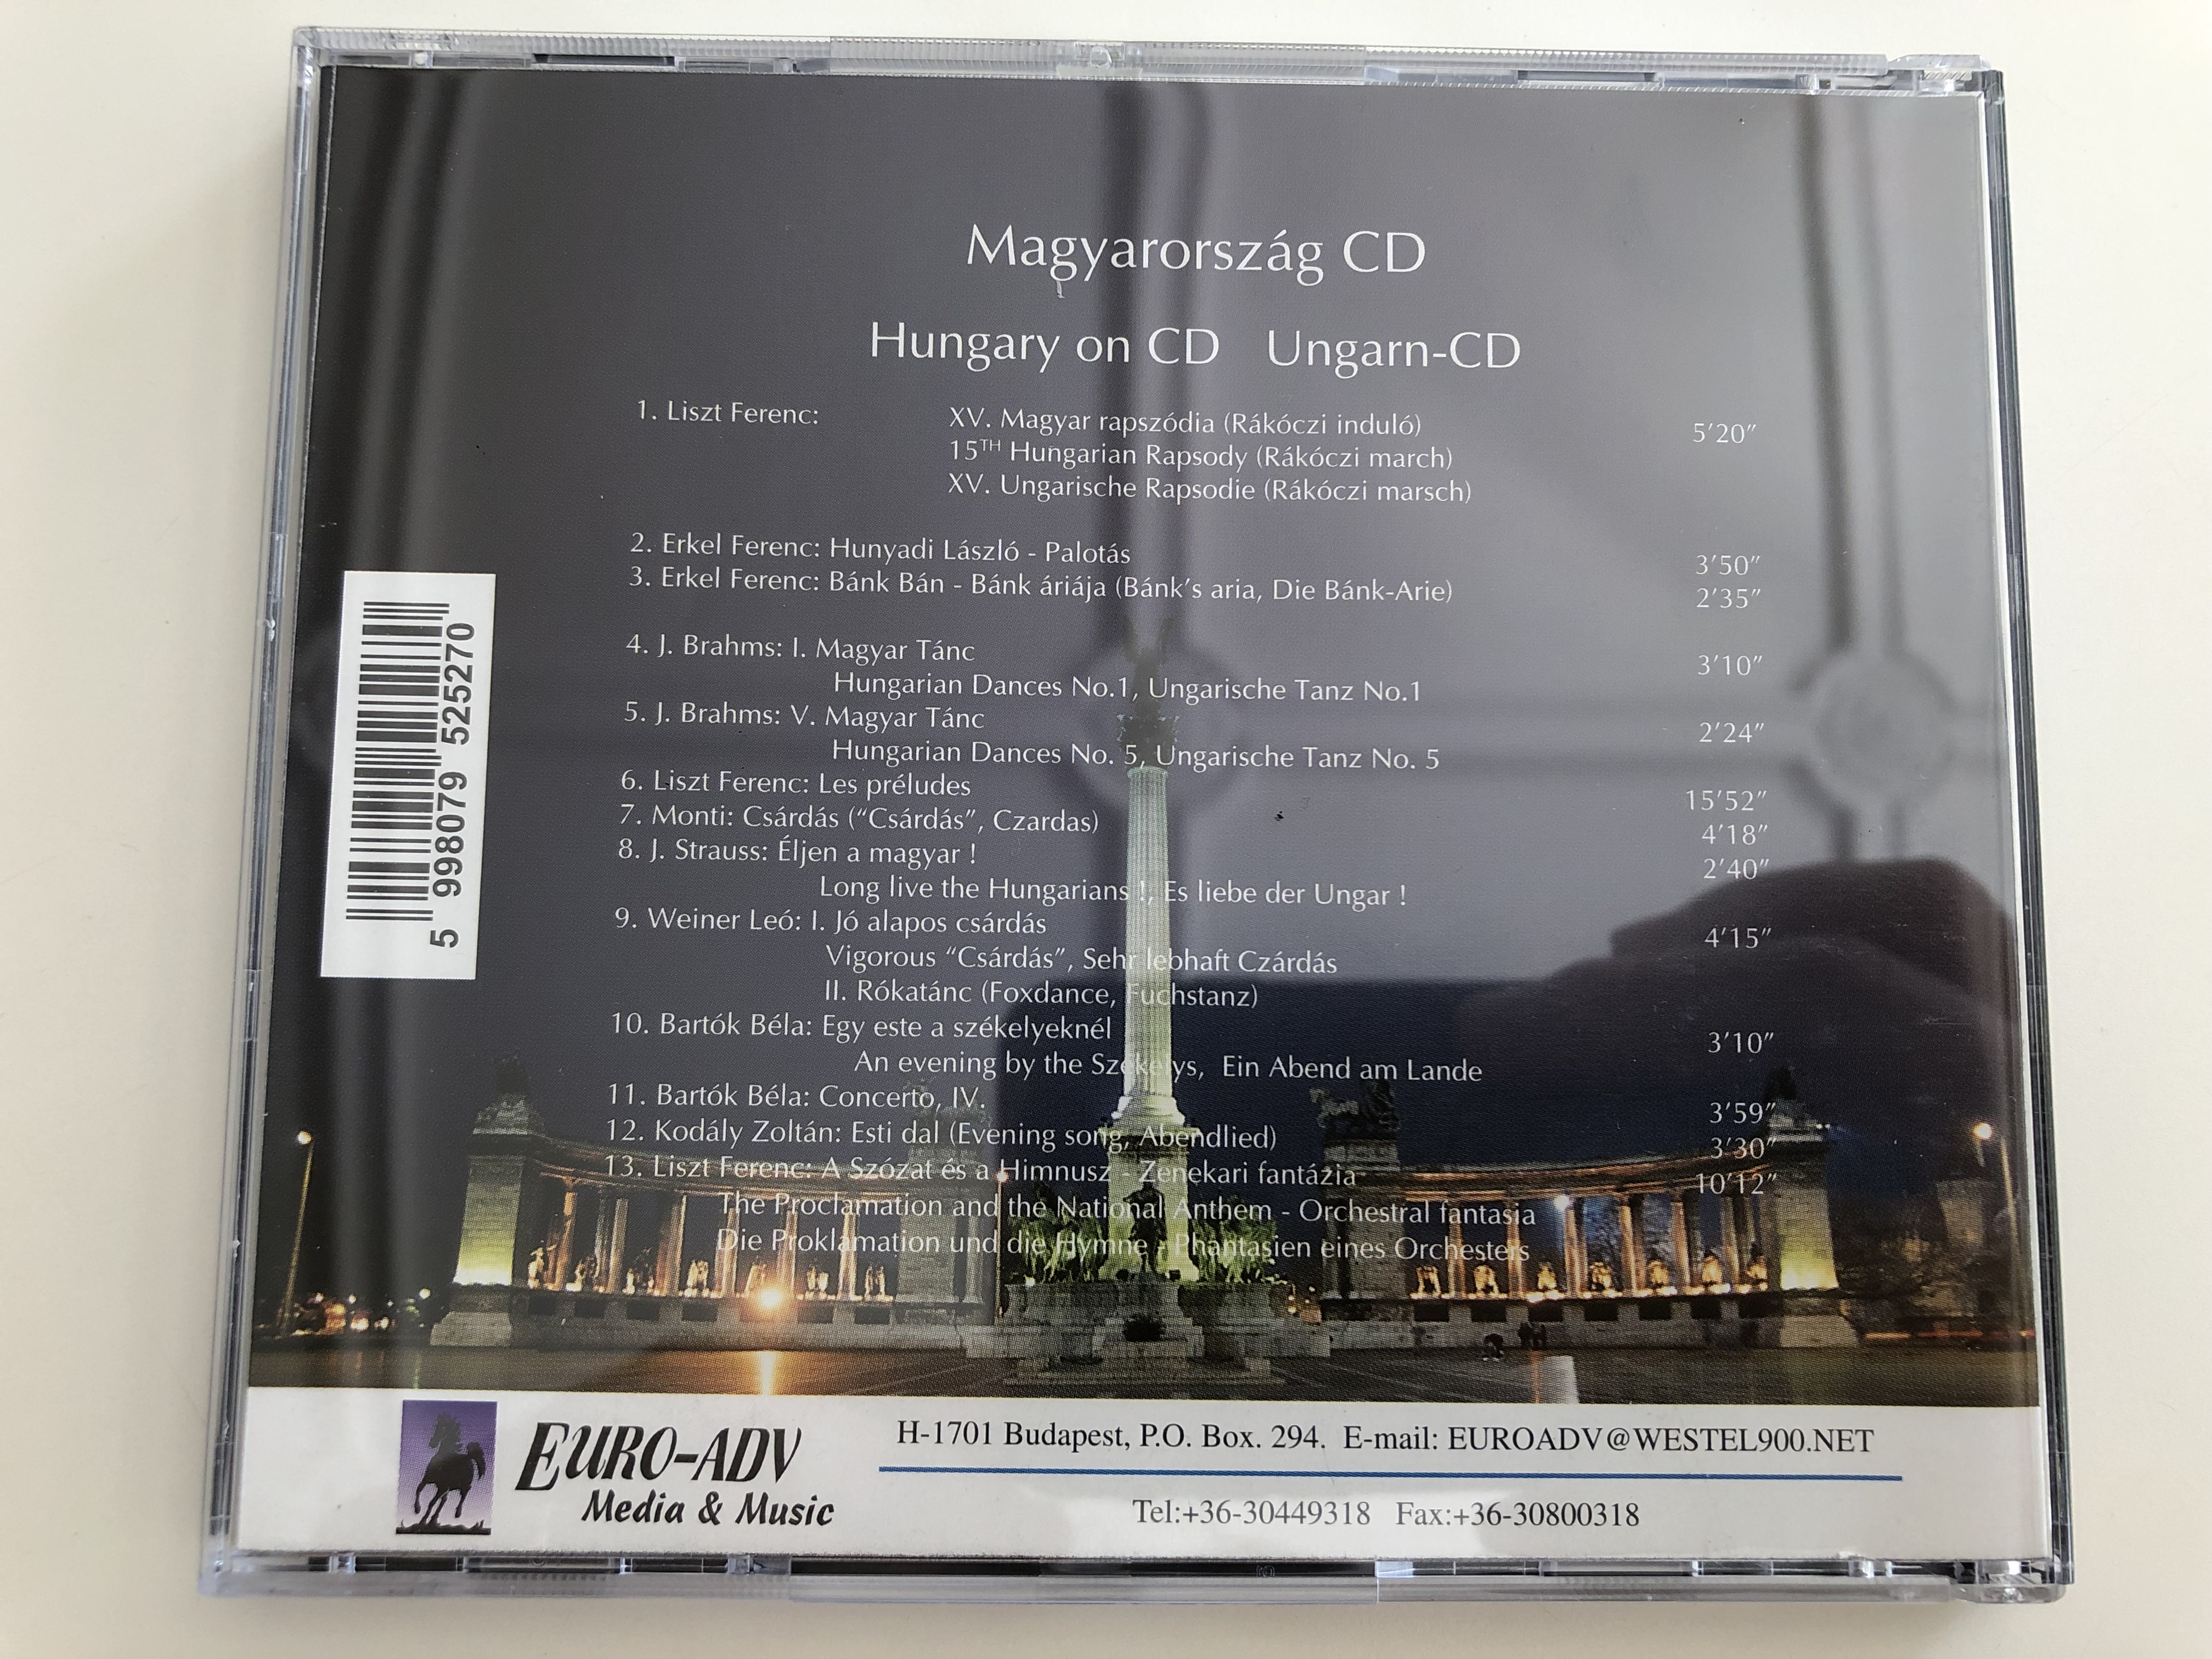 magyarorsz-g-cd-hungary-on-cd-ungarn-cd-magyarorsz-g-hangulata-zen-ben-s-k-pekben-hungary-s-atmosphere-in-music-and-pictures-eamcd-2527-audio-cd-1996-9-.jpg